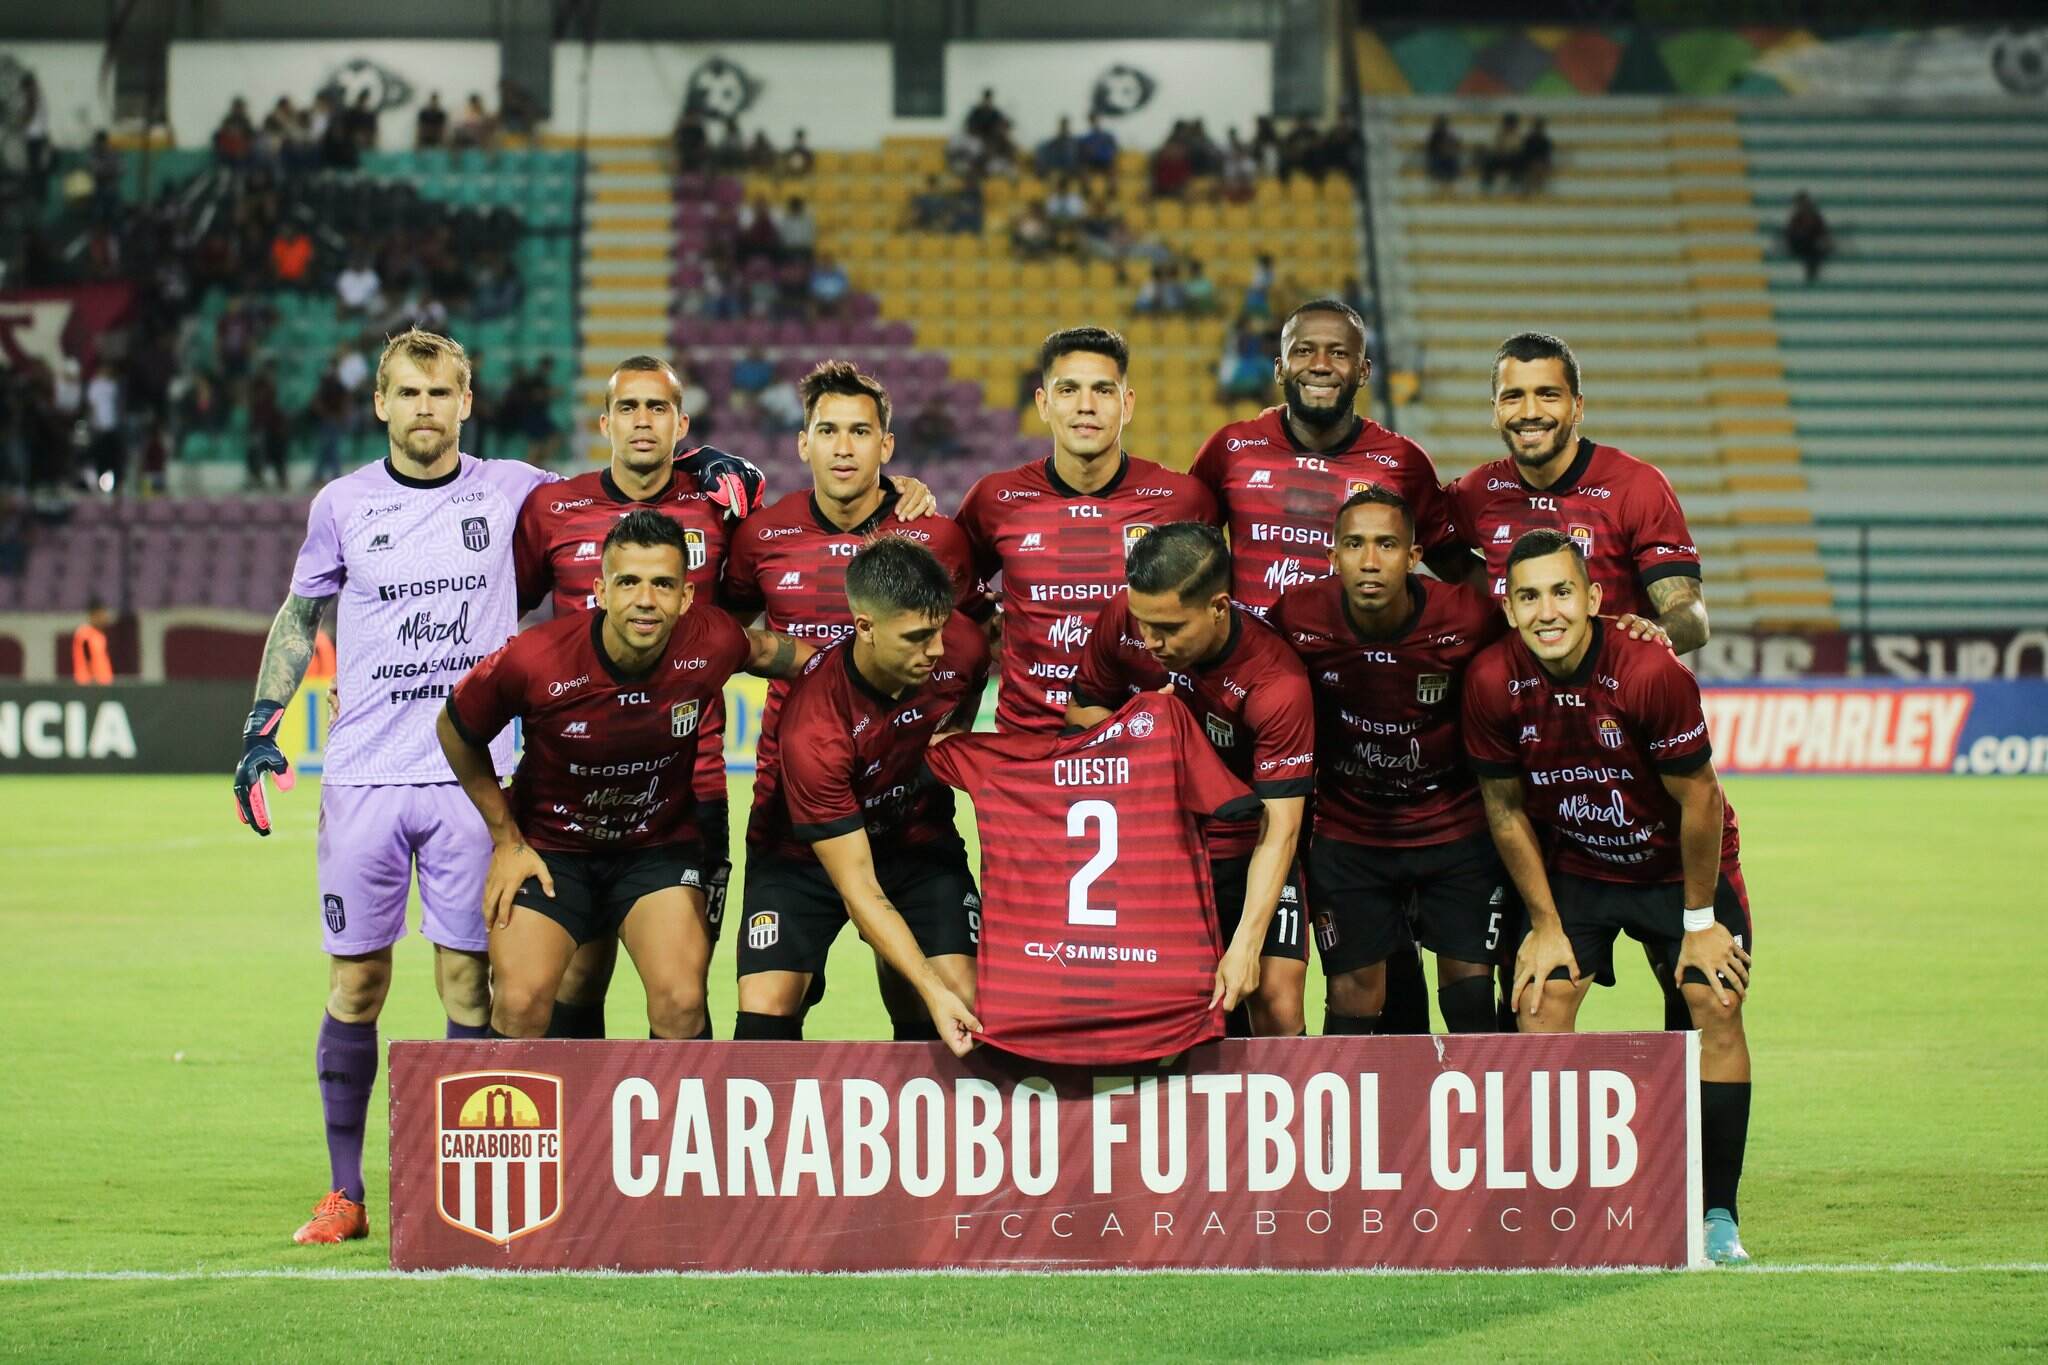 carabobo-fc-24-football-club-facts